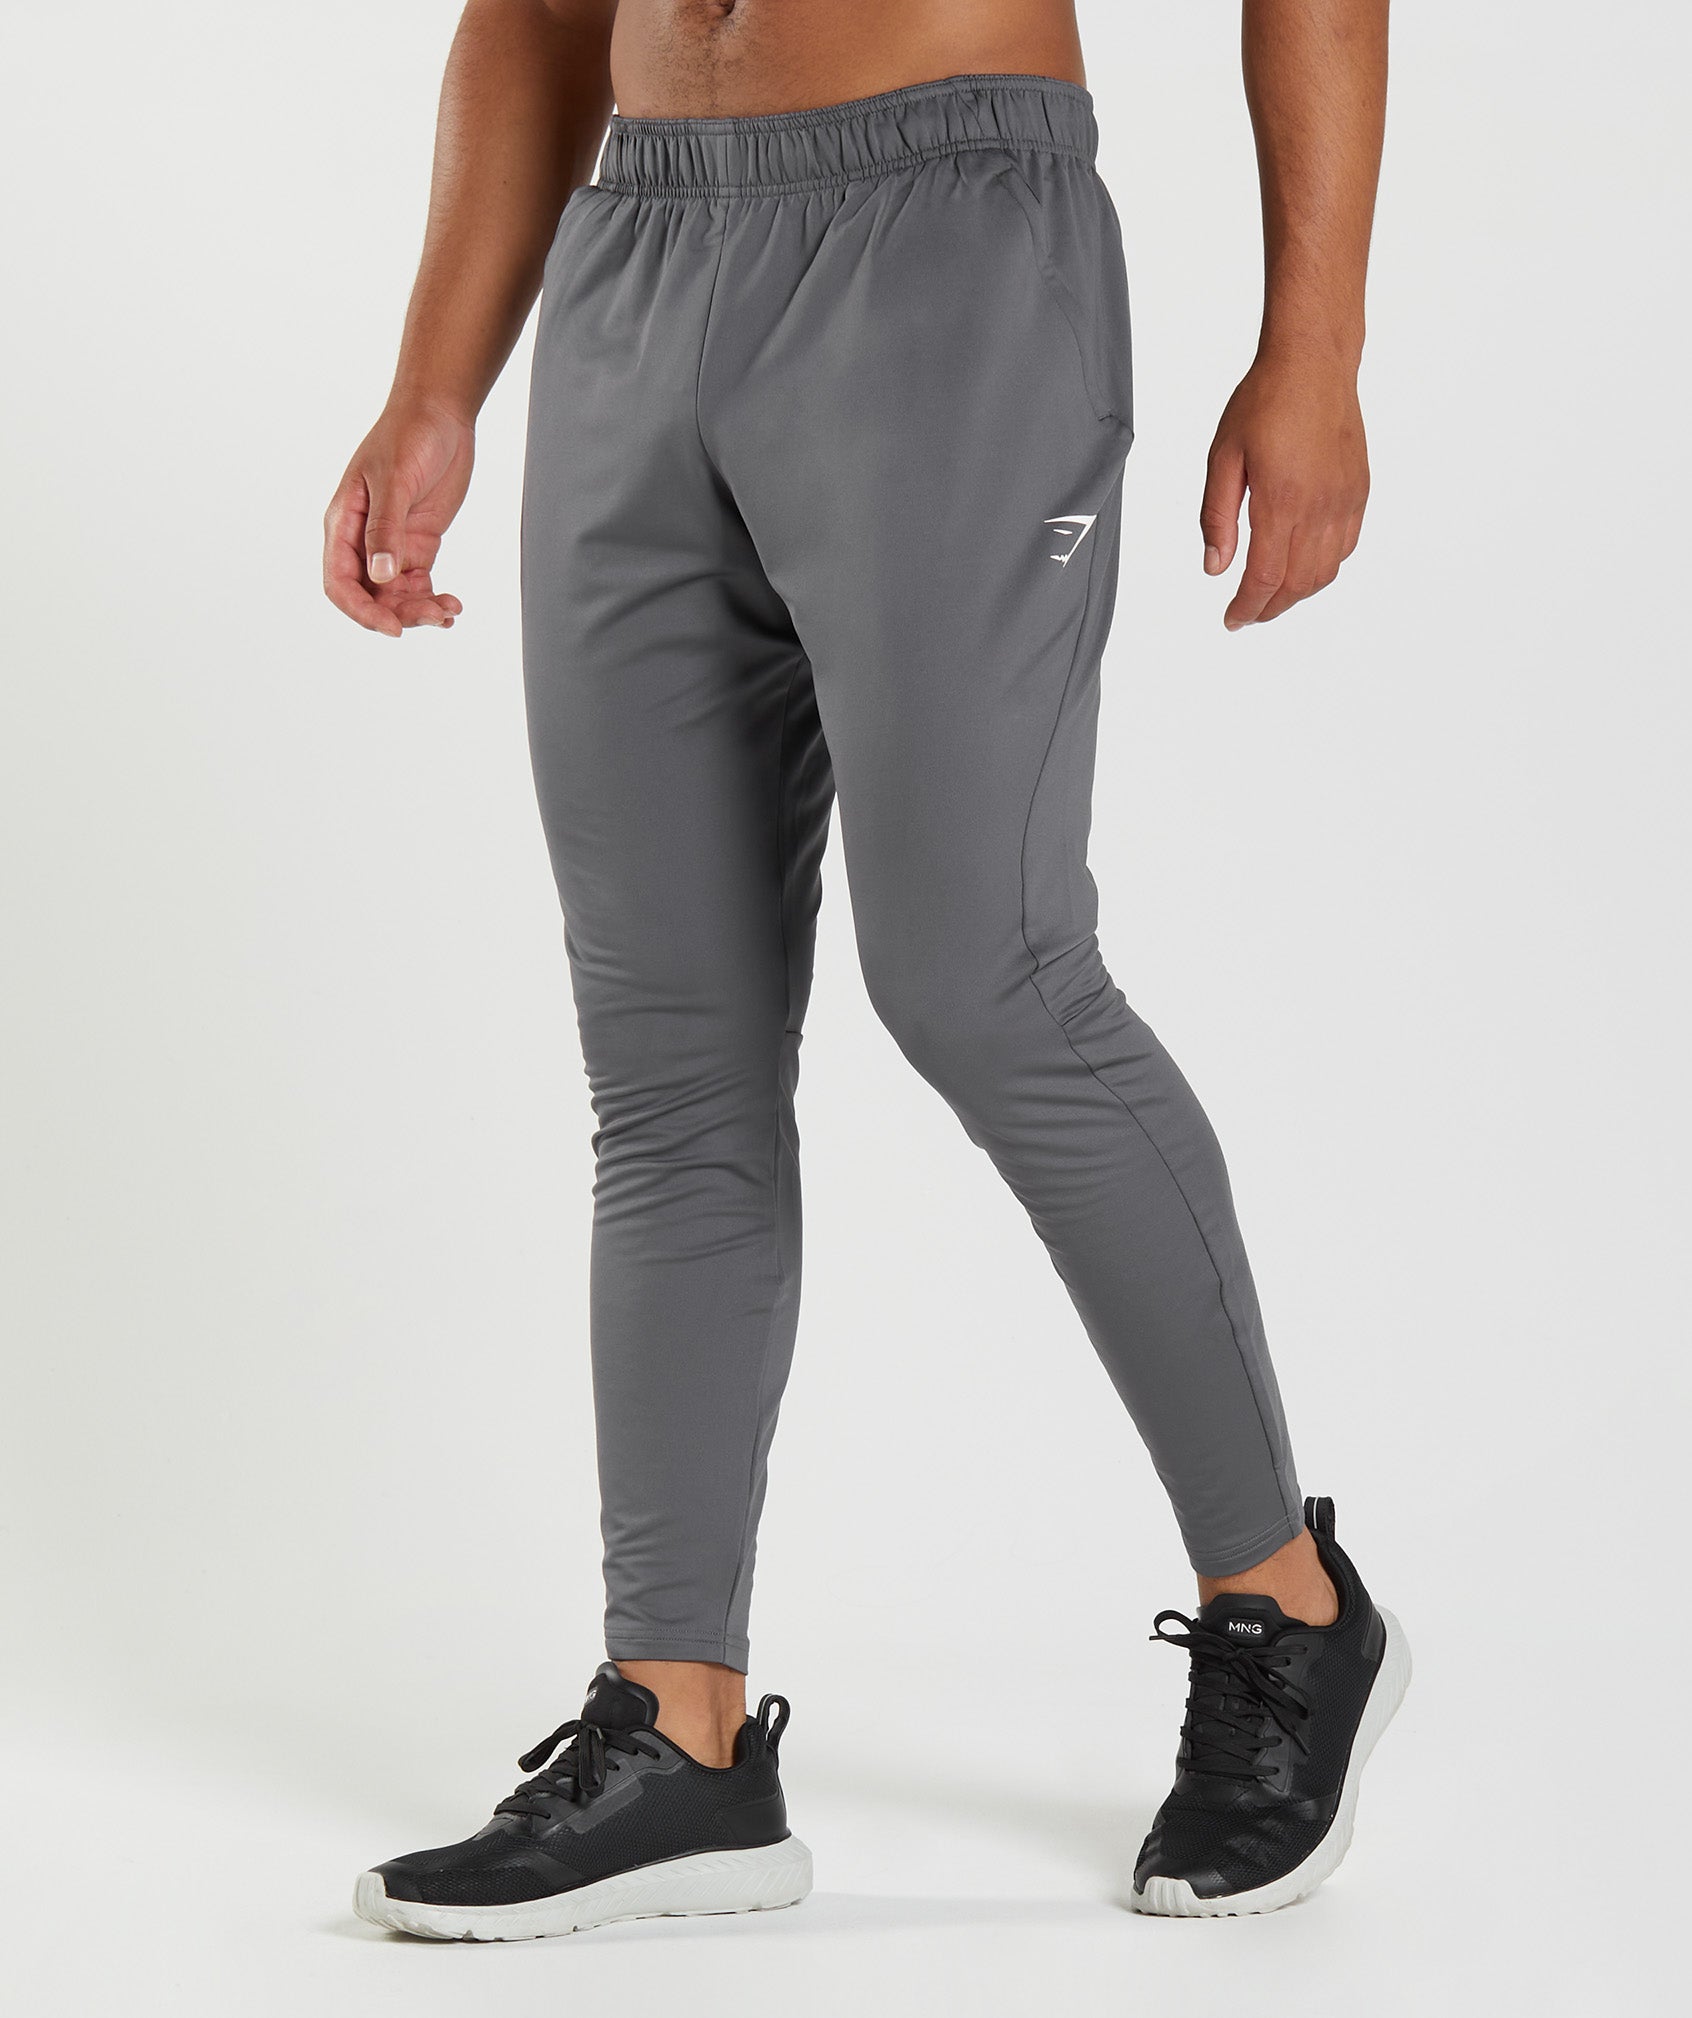 Gymshark Sport Joggers - Silhouette Grey